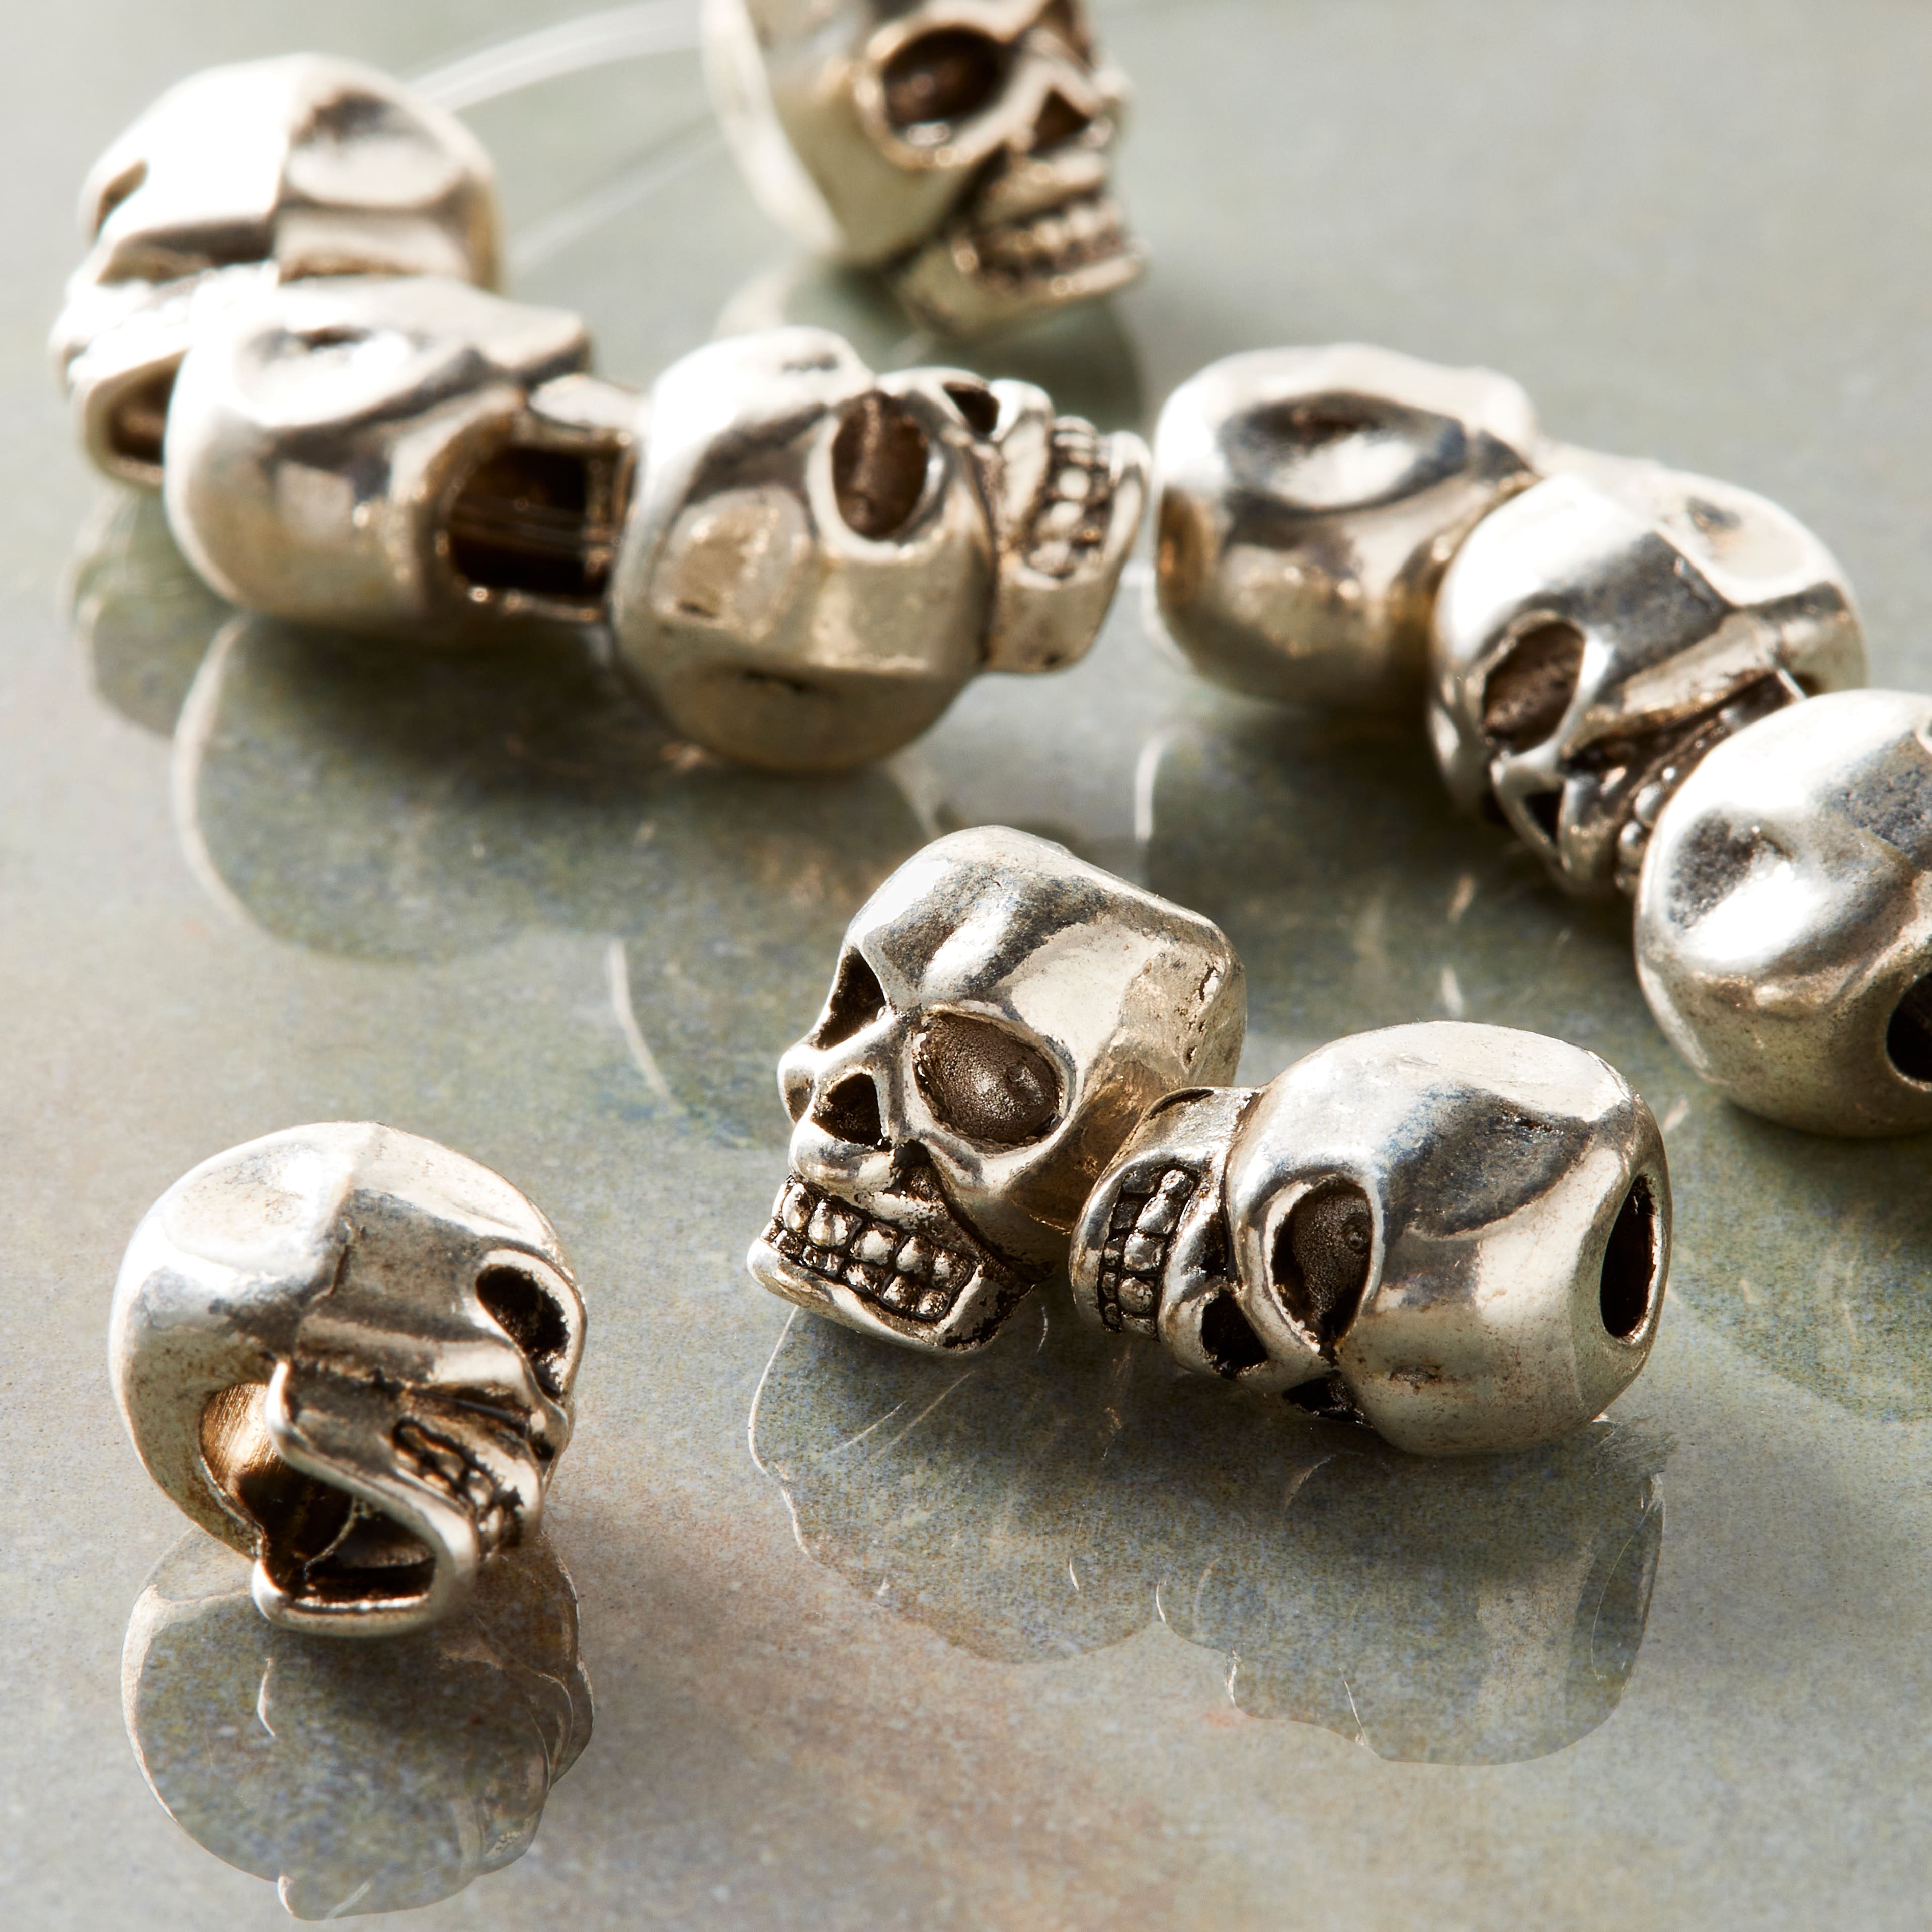 12 Packs: 12 ct. (144 total) Antique Gold Metal Skull Beads, 12mm by Bead  Landing™